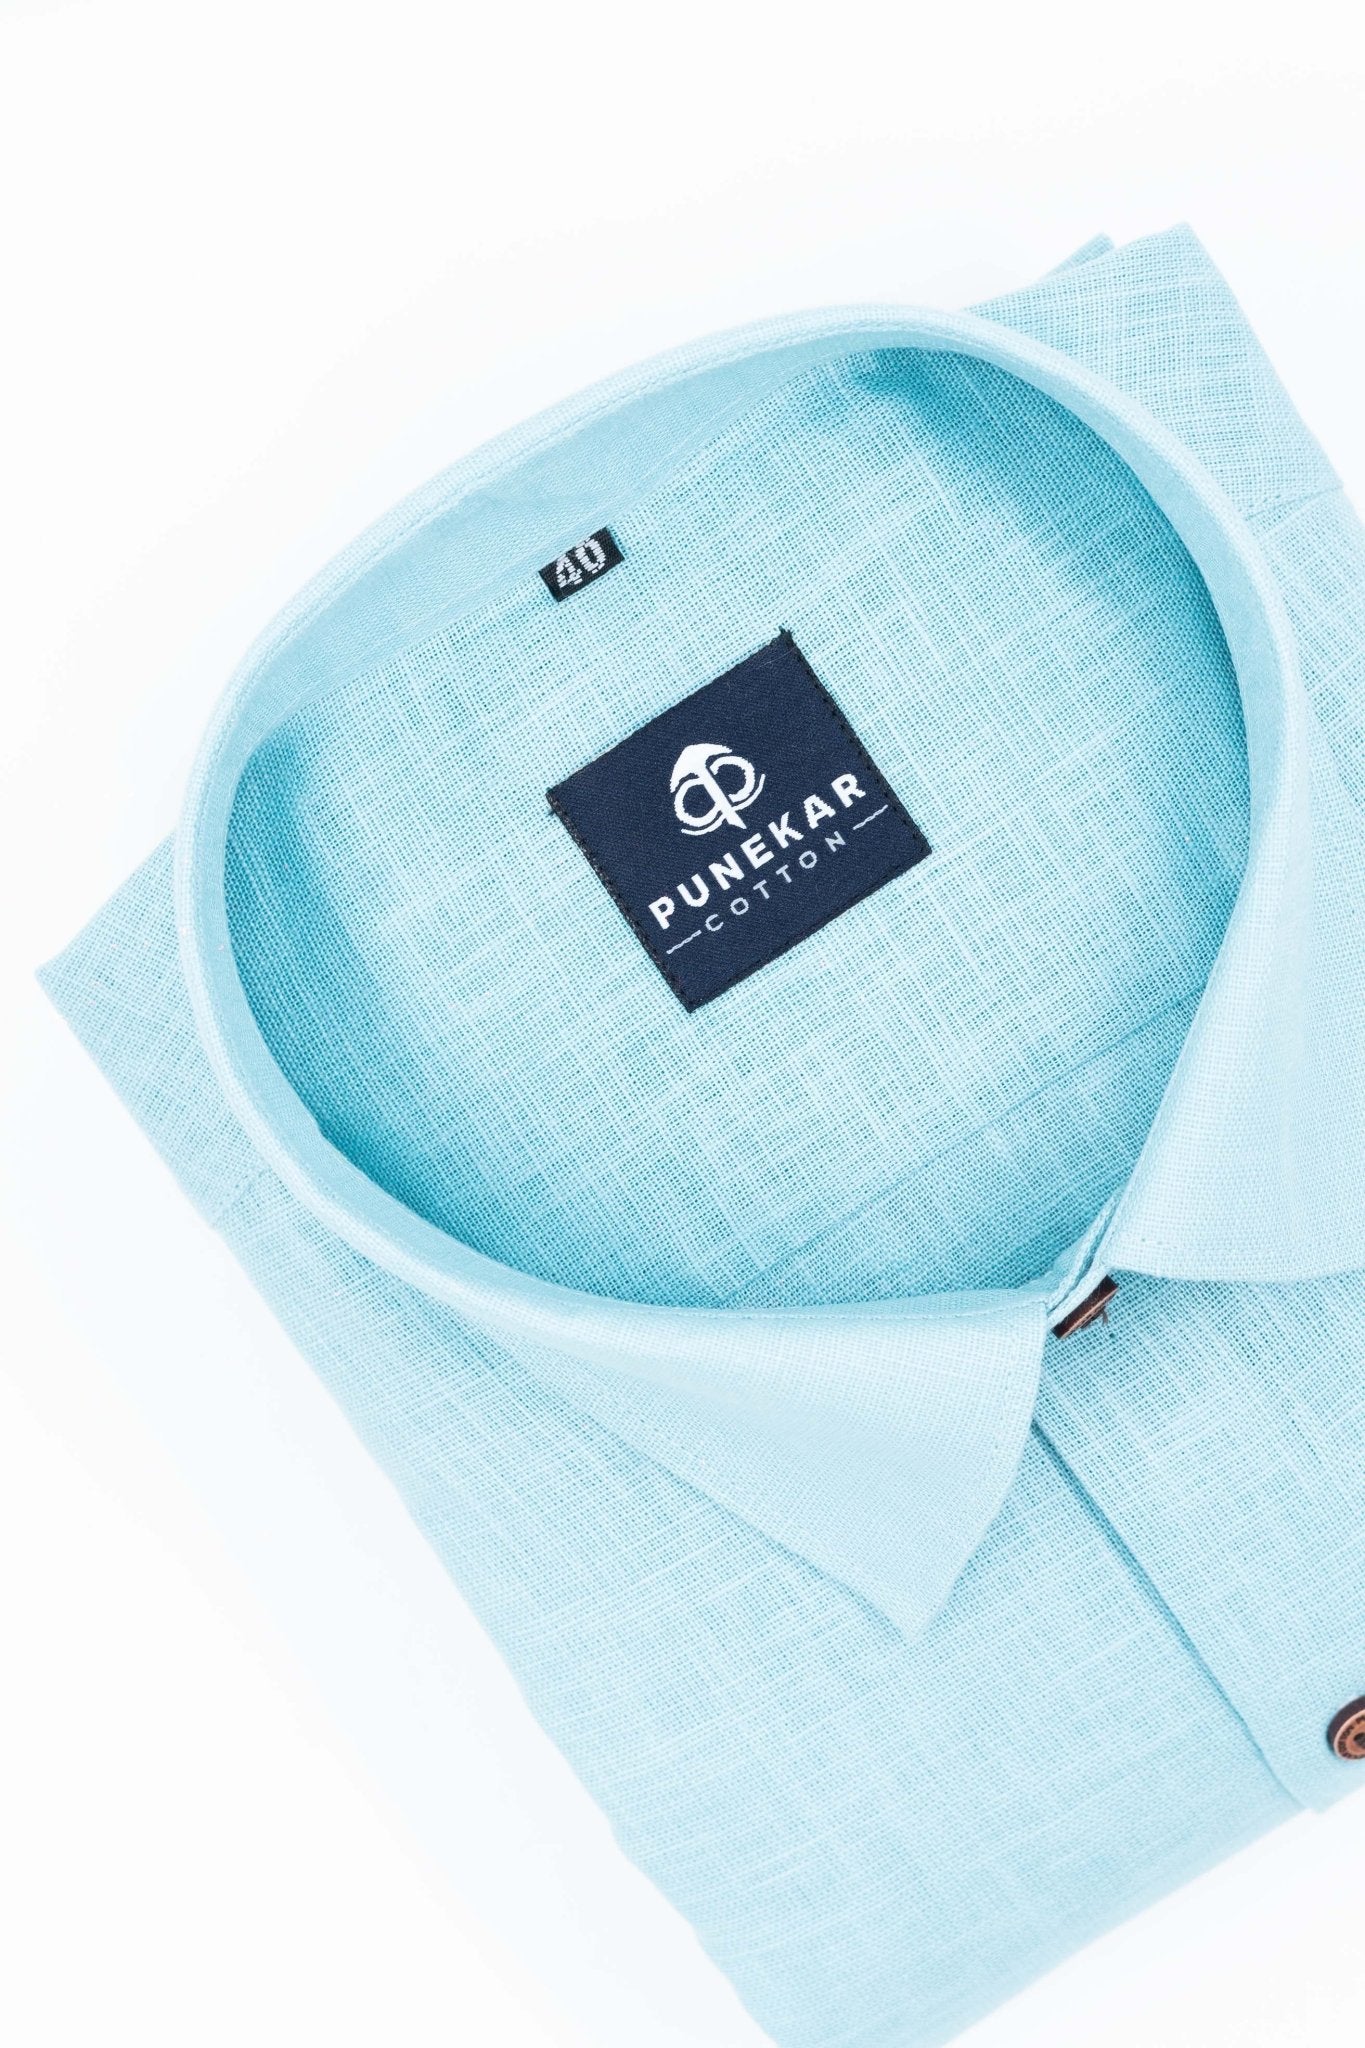 Sky Blue Color Linen Formal Shirts For Men - Punekar Cotton